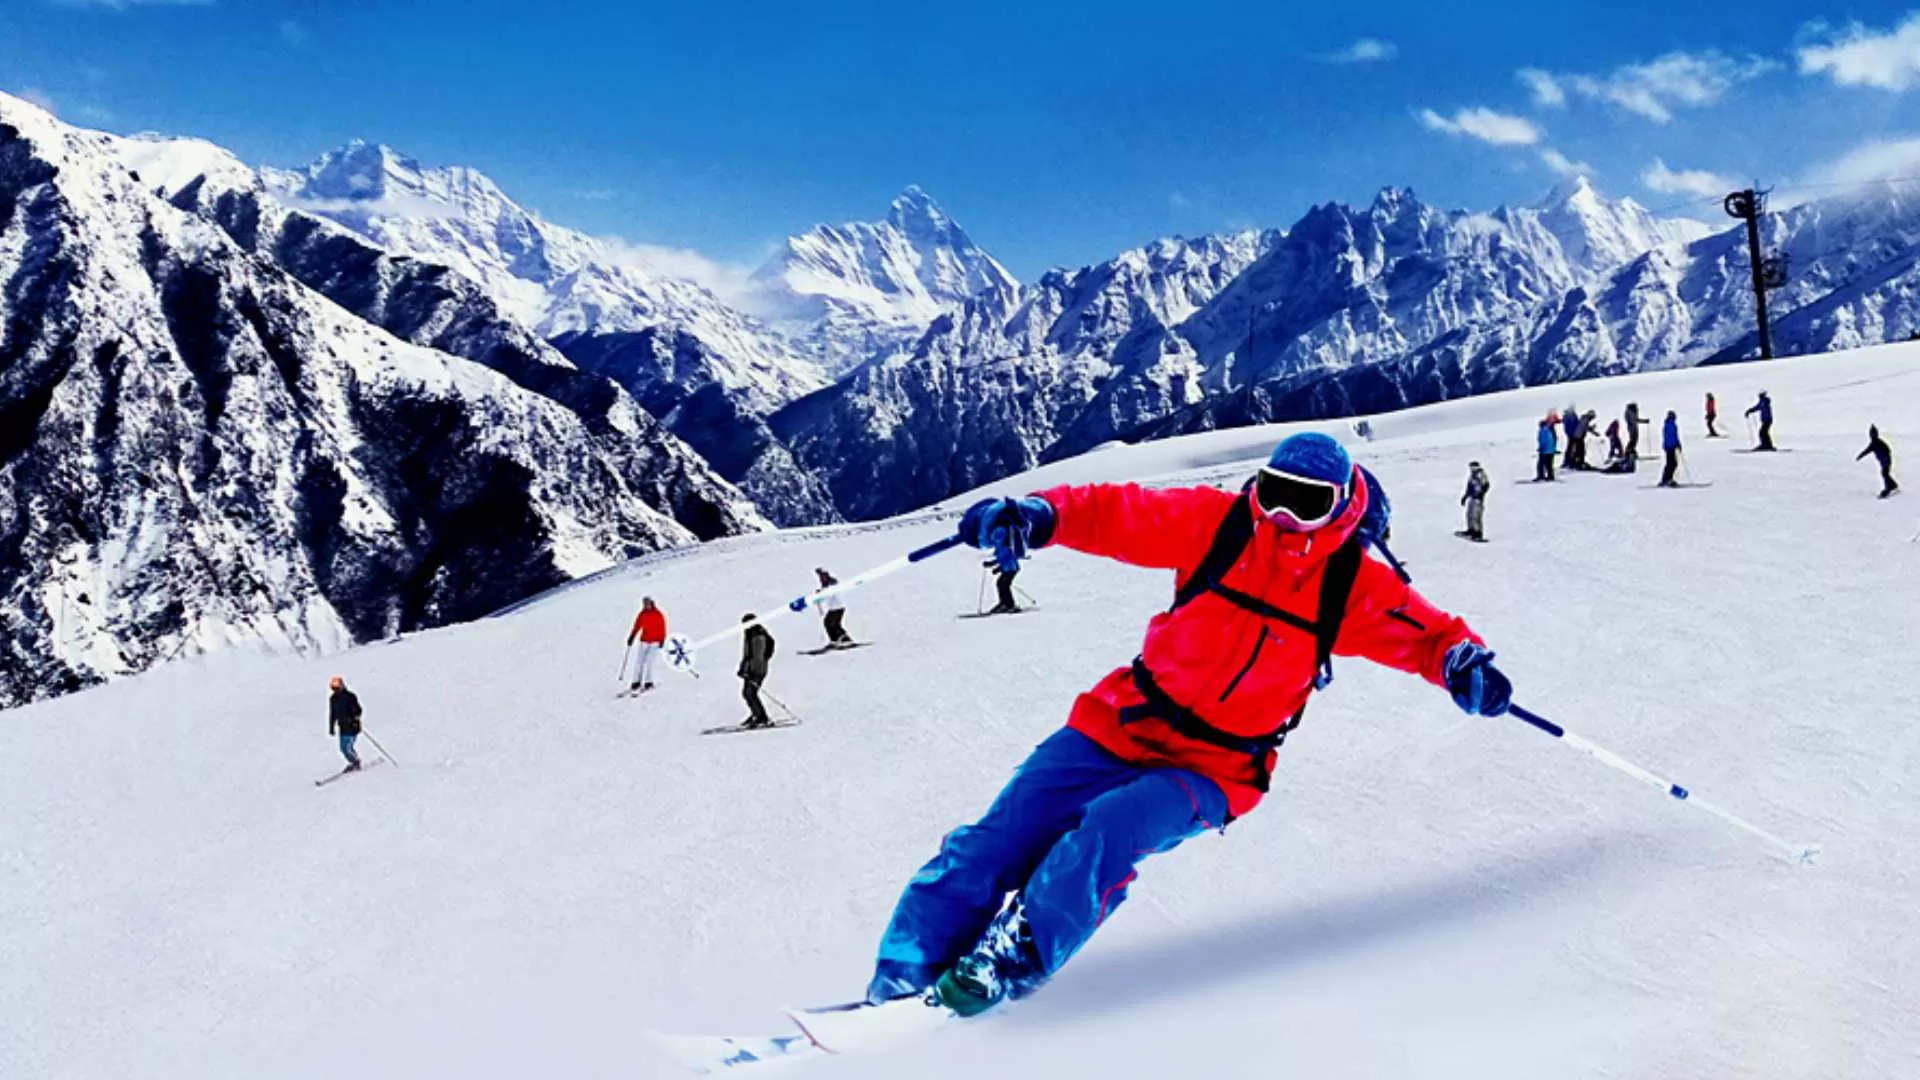 Auli - The Heaven on Skiing in Garhwal